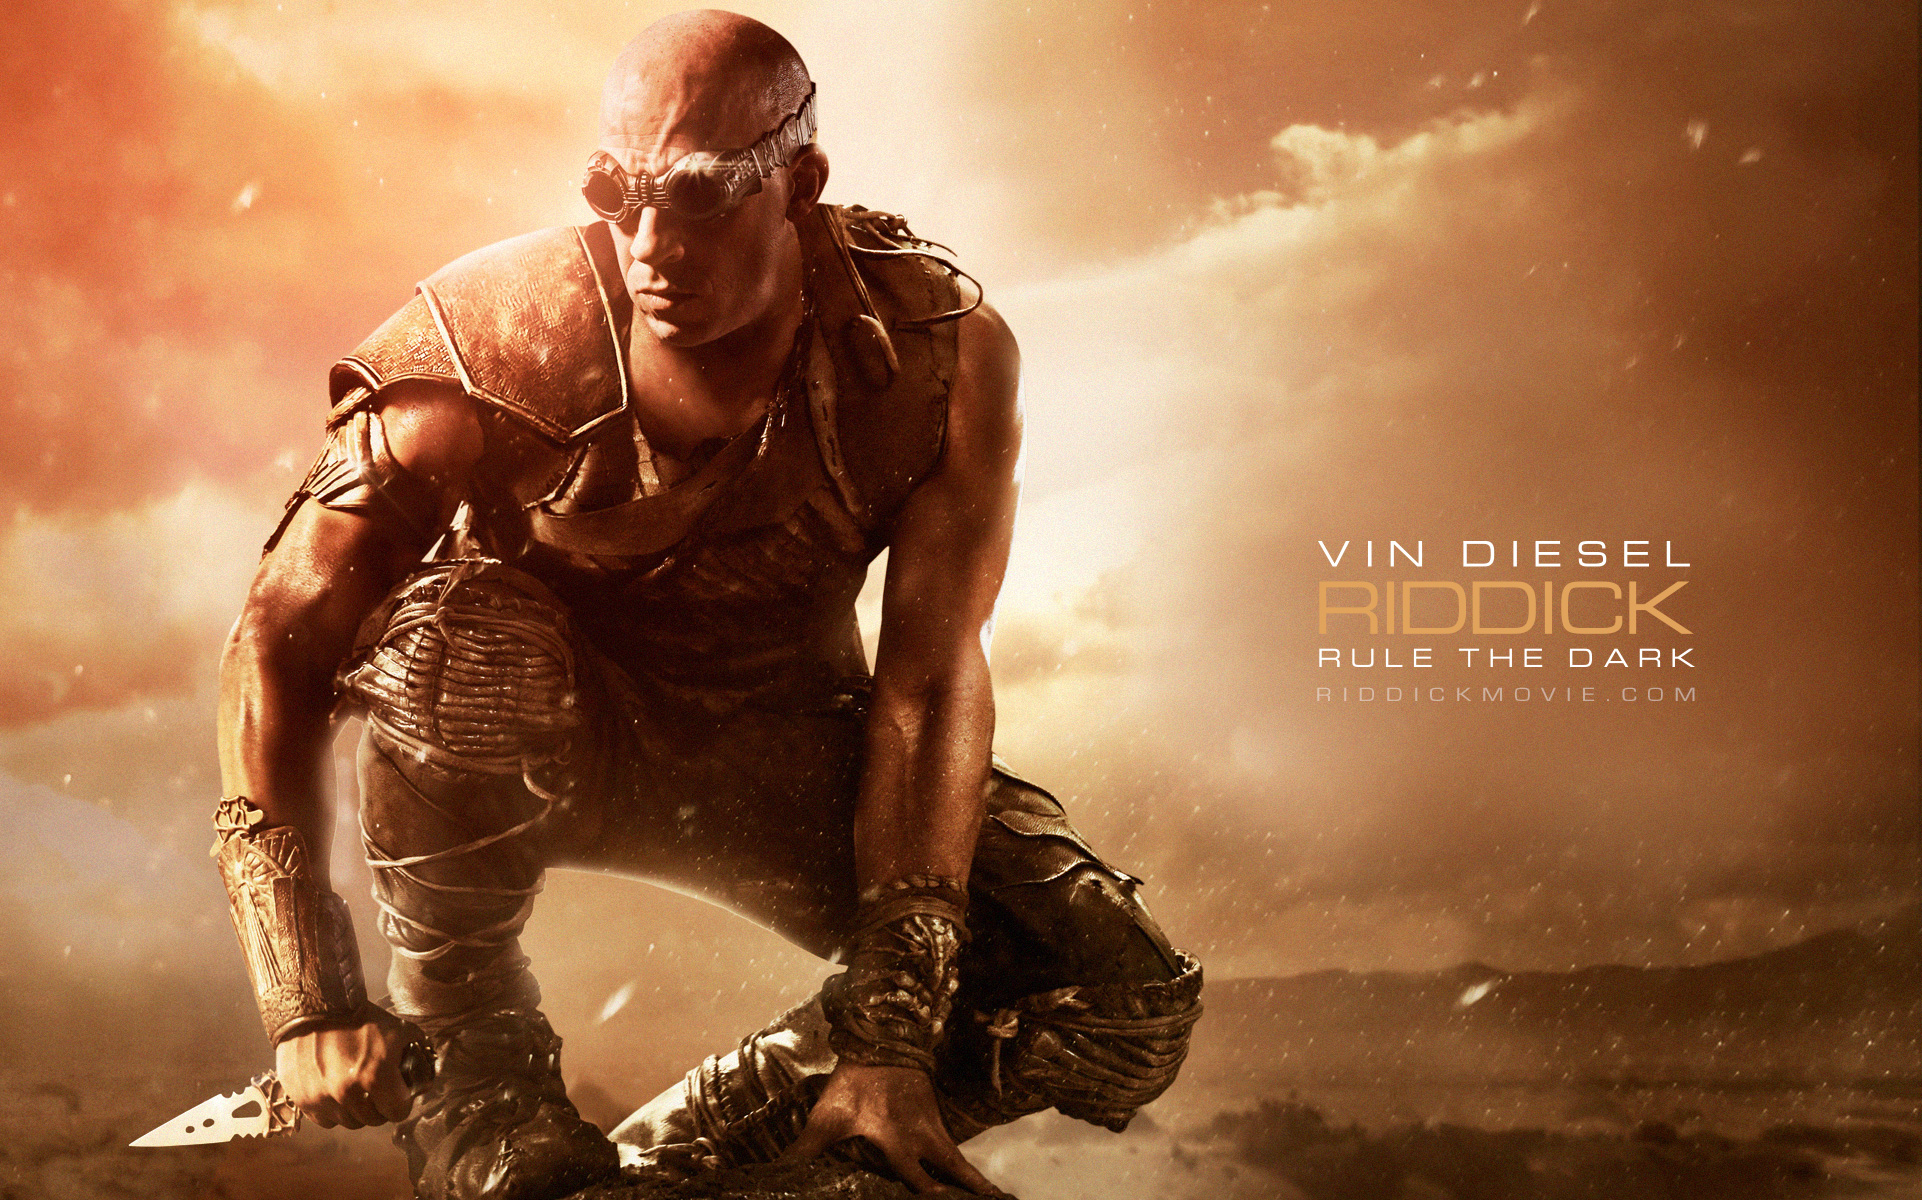 Riddick #3